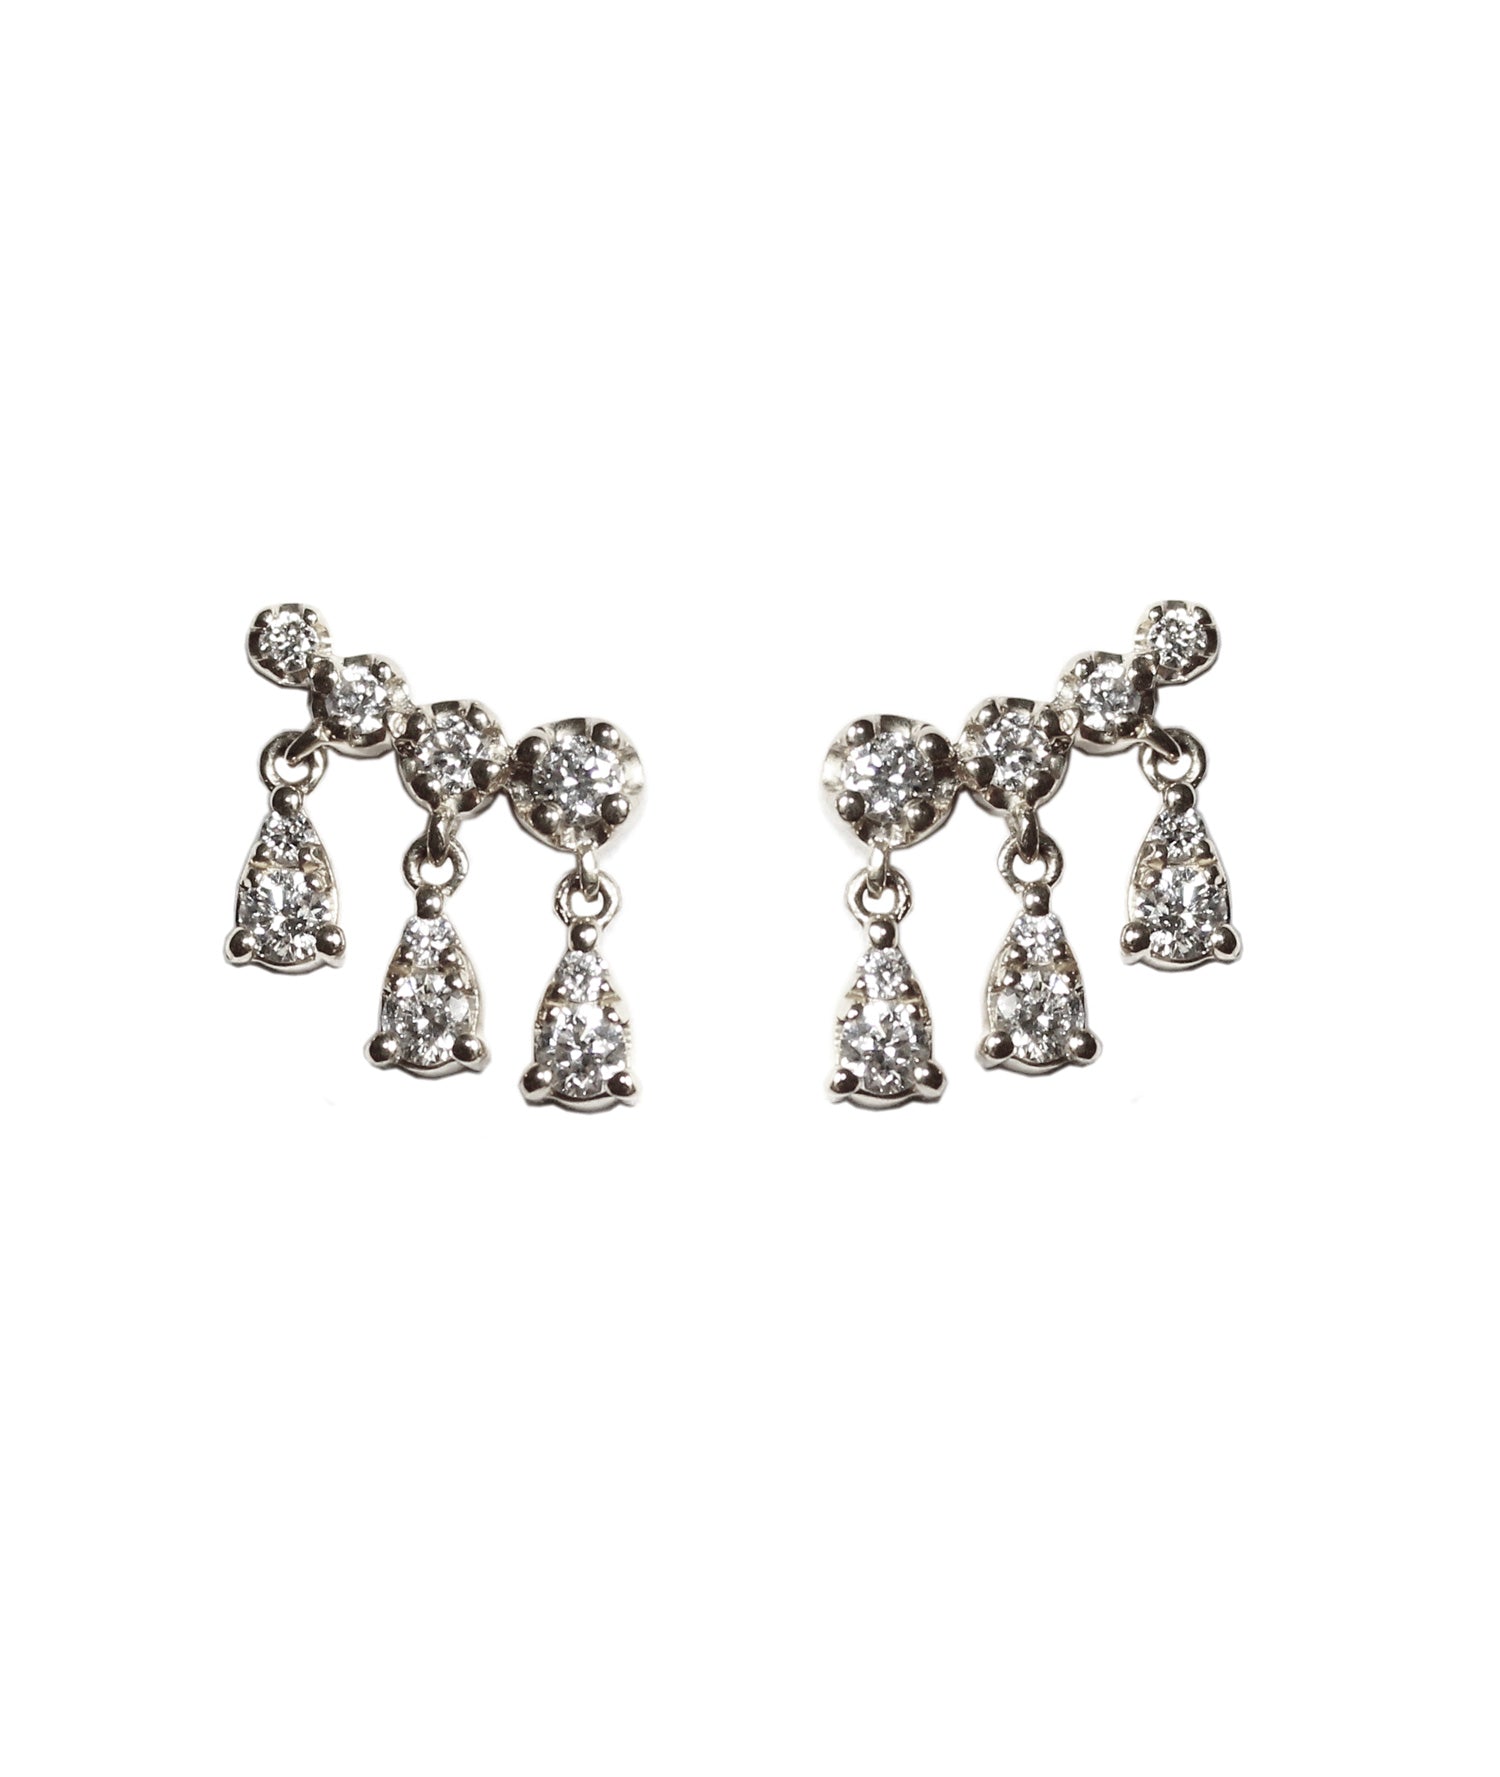 Rain Drop Diamond Drop Earrings in 18K White Gold - Gold and Diamond Earrings - Tess Van Ghert - 4